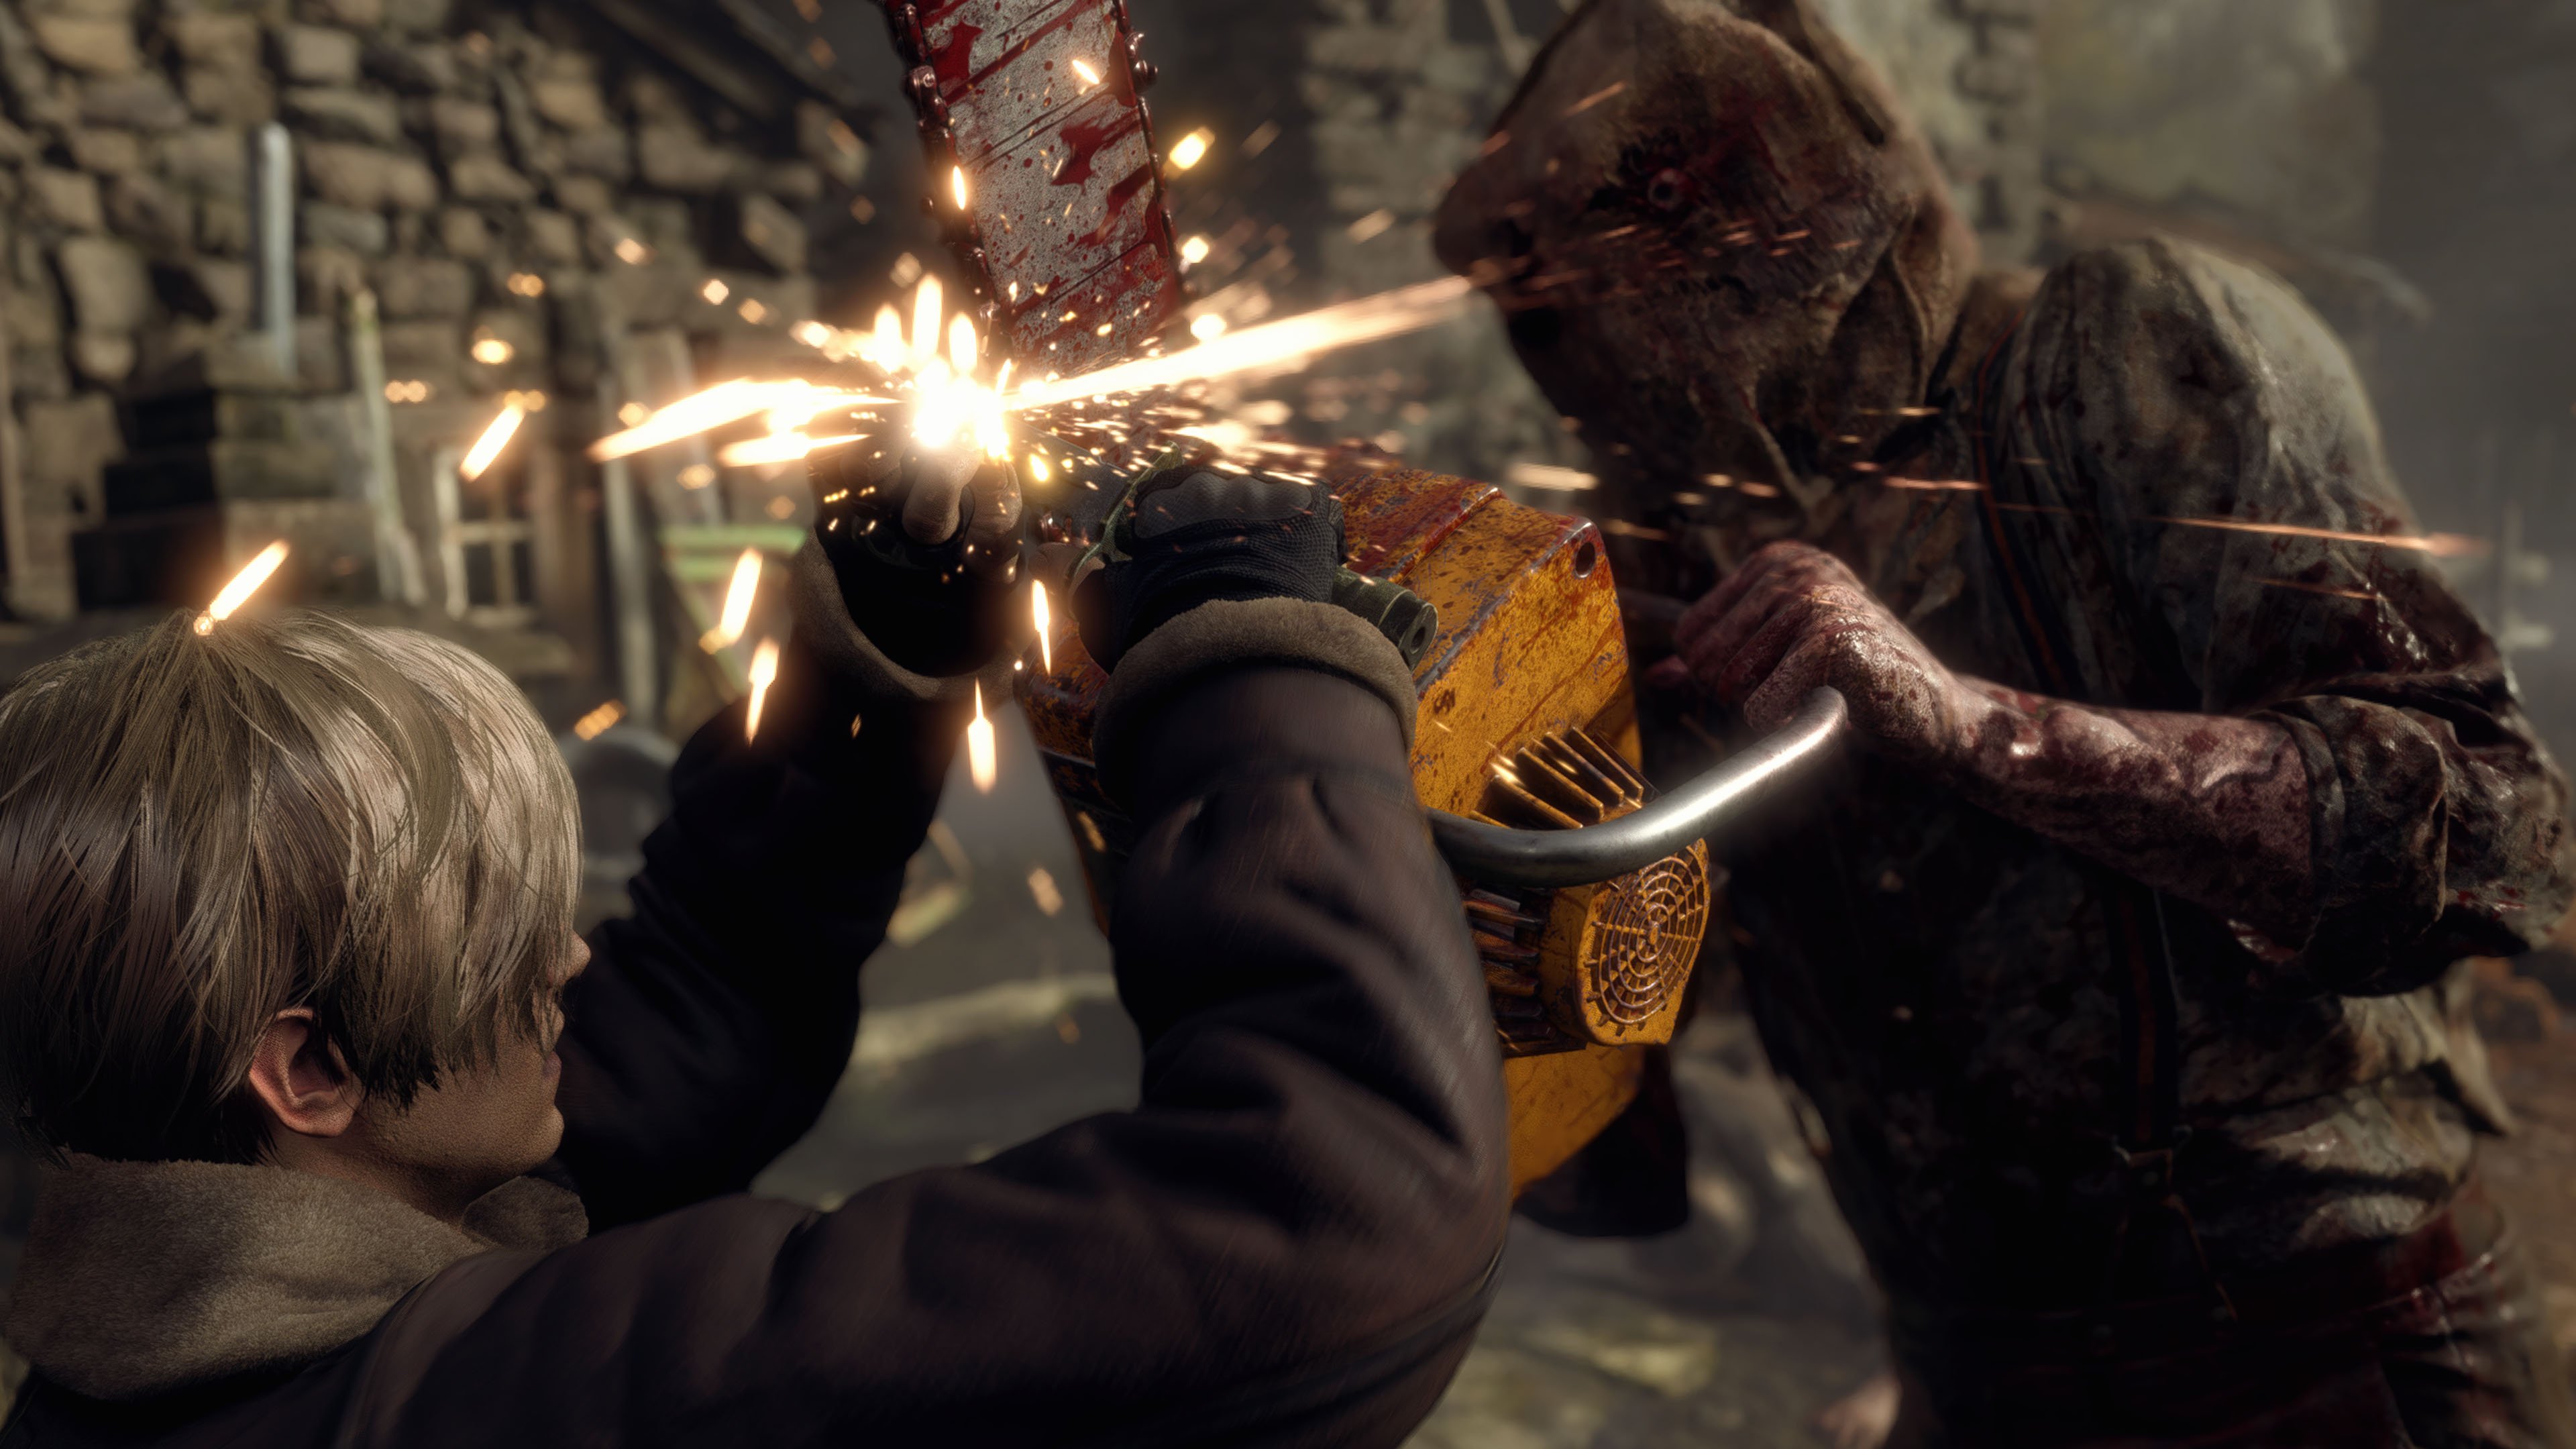 Resident Evil 4 Remake: Chainsaw Demo Trailer